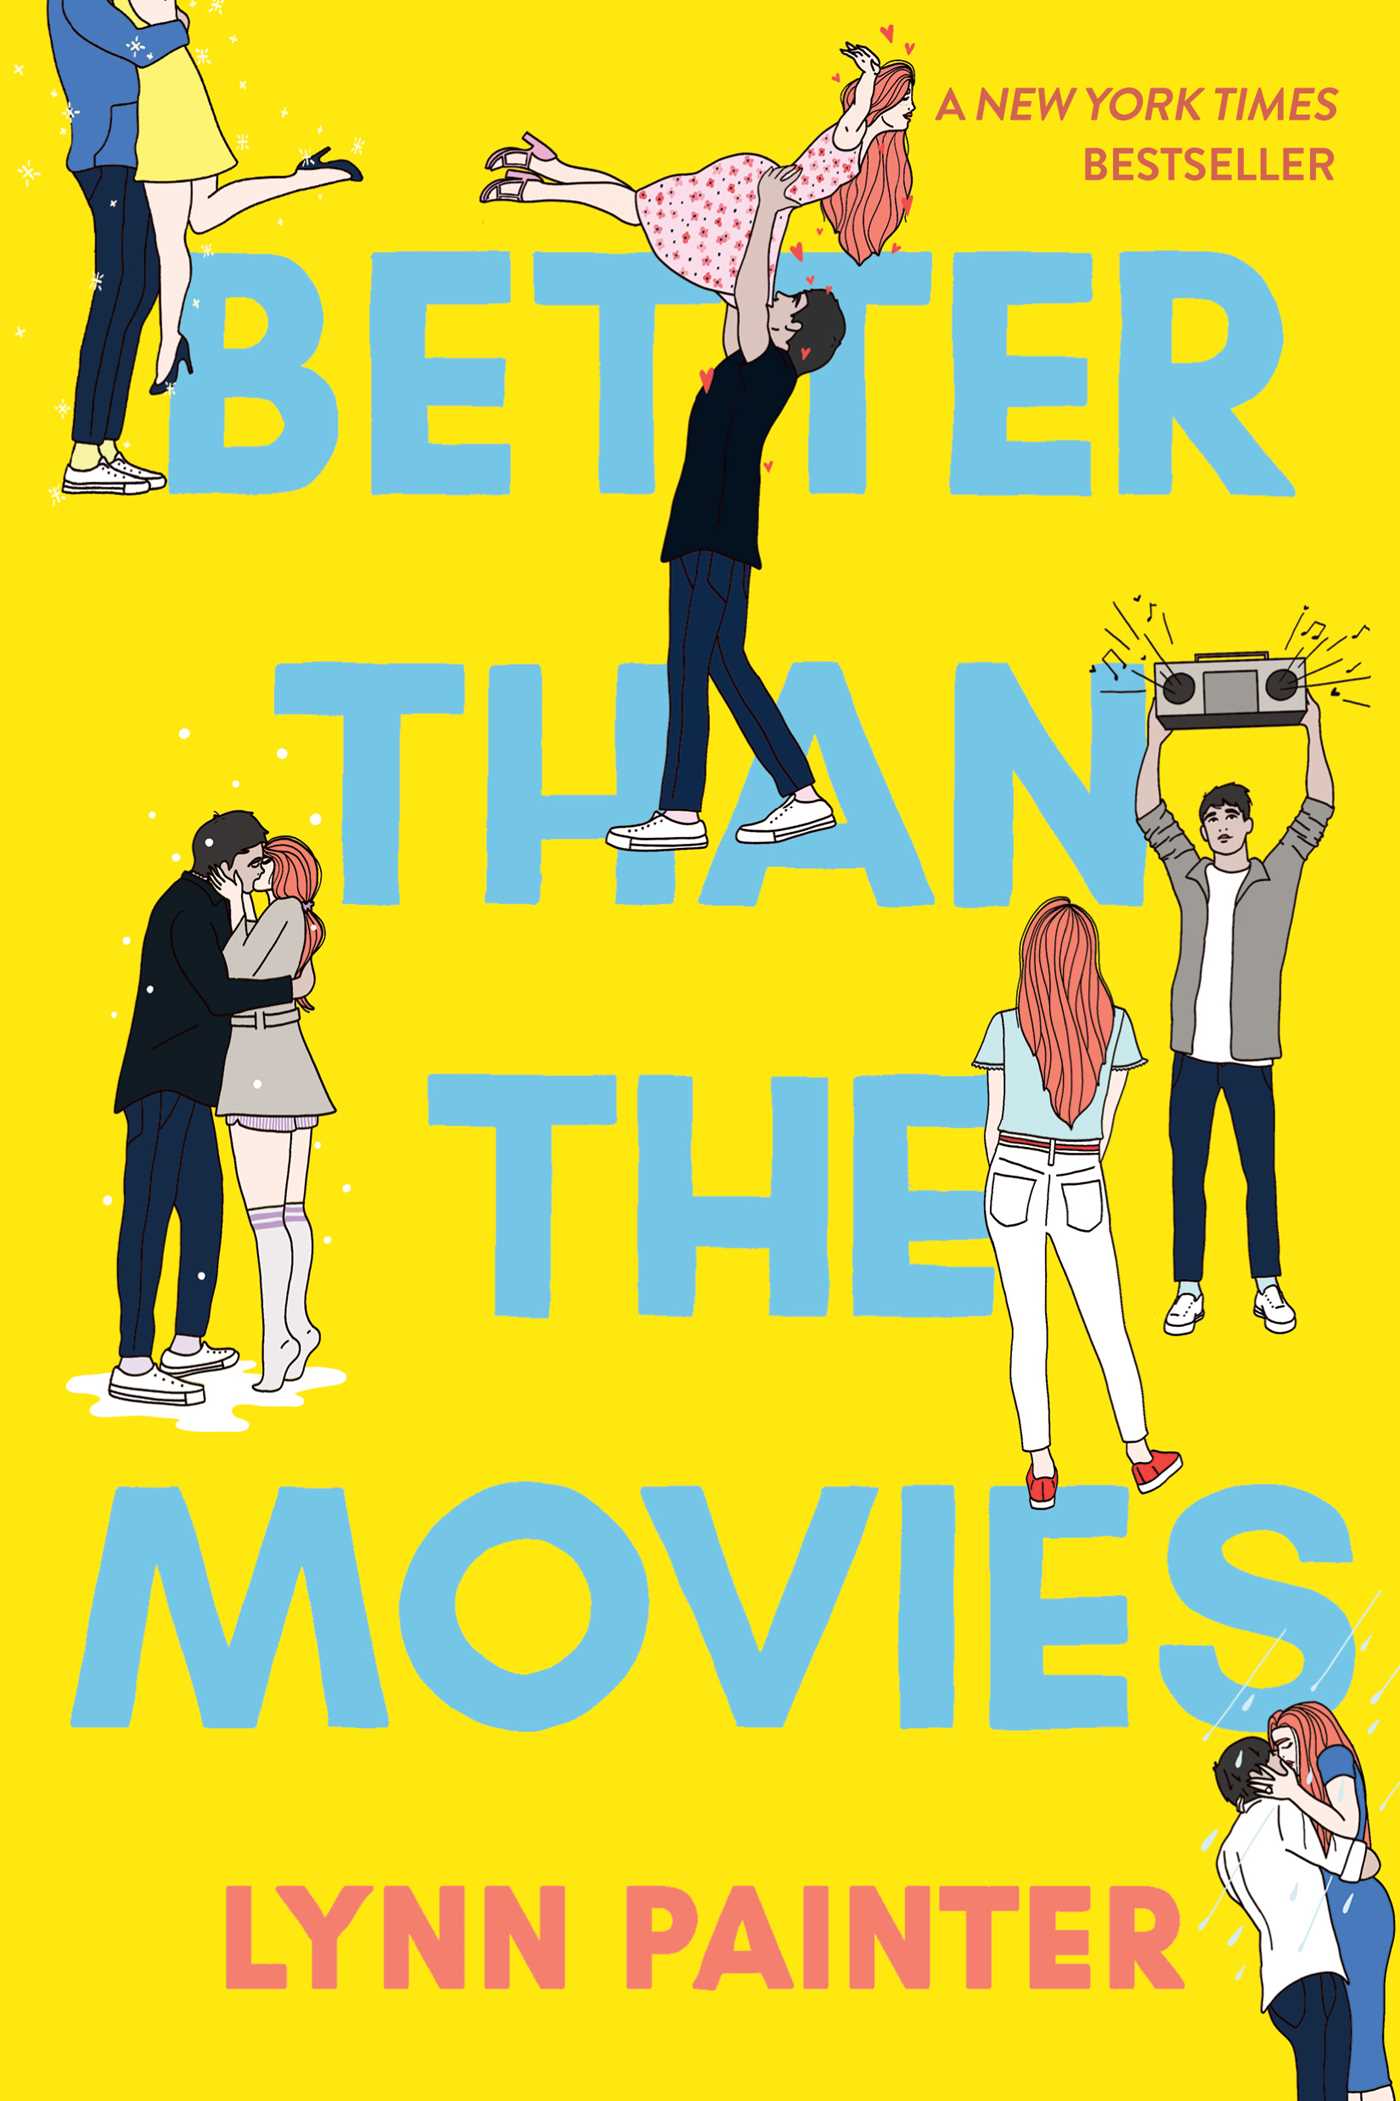 Better Than the Movies | Painter, Lynn